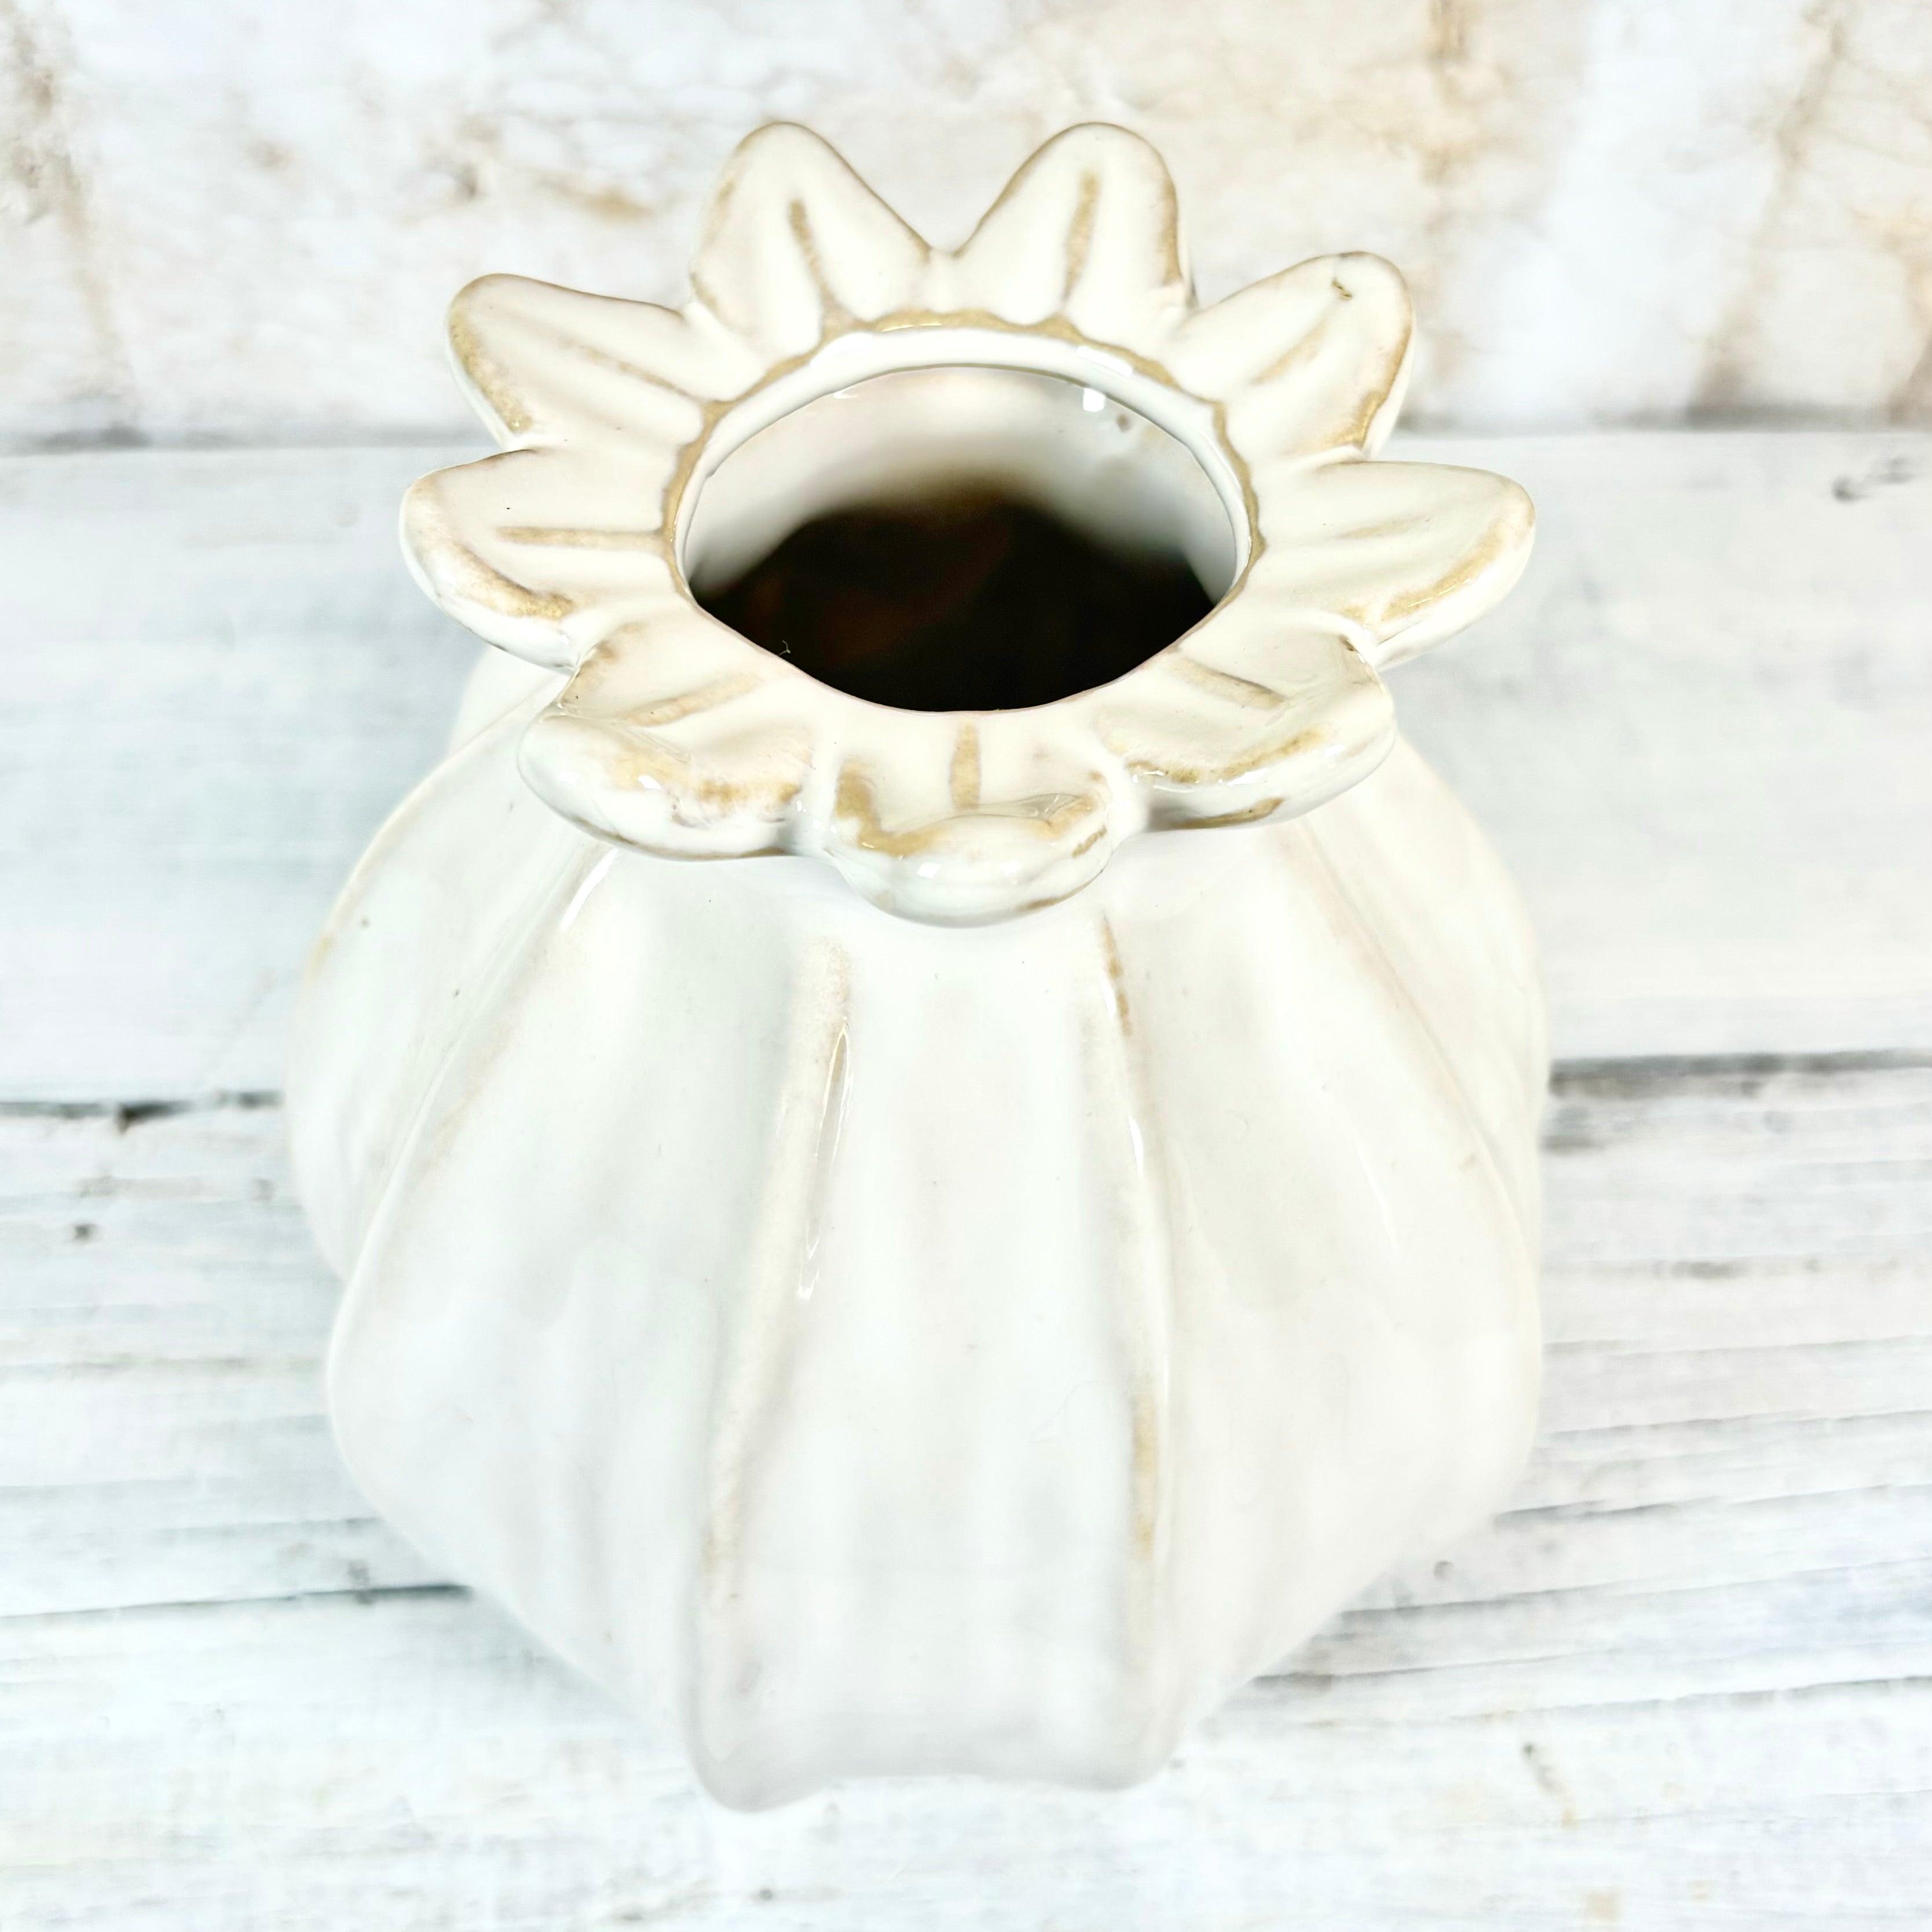 Rosemead White Ceramic Vase